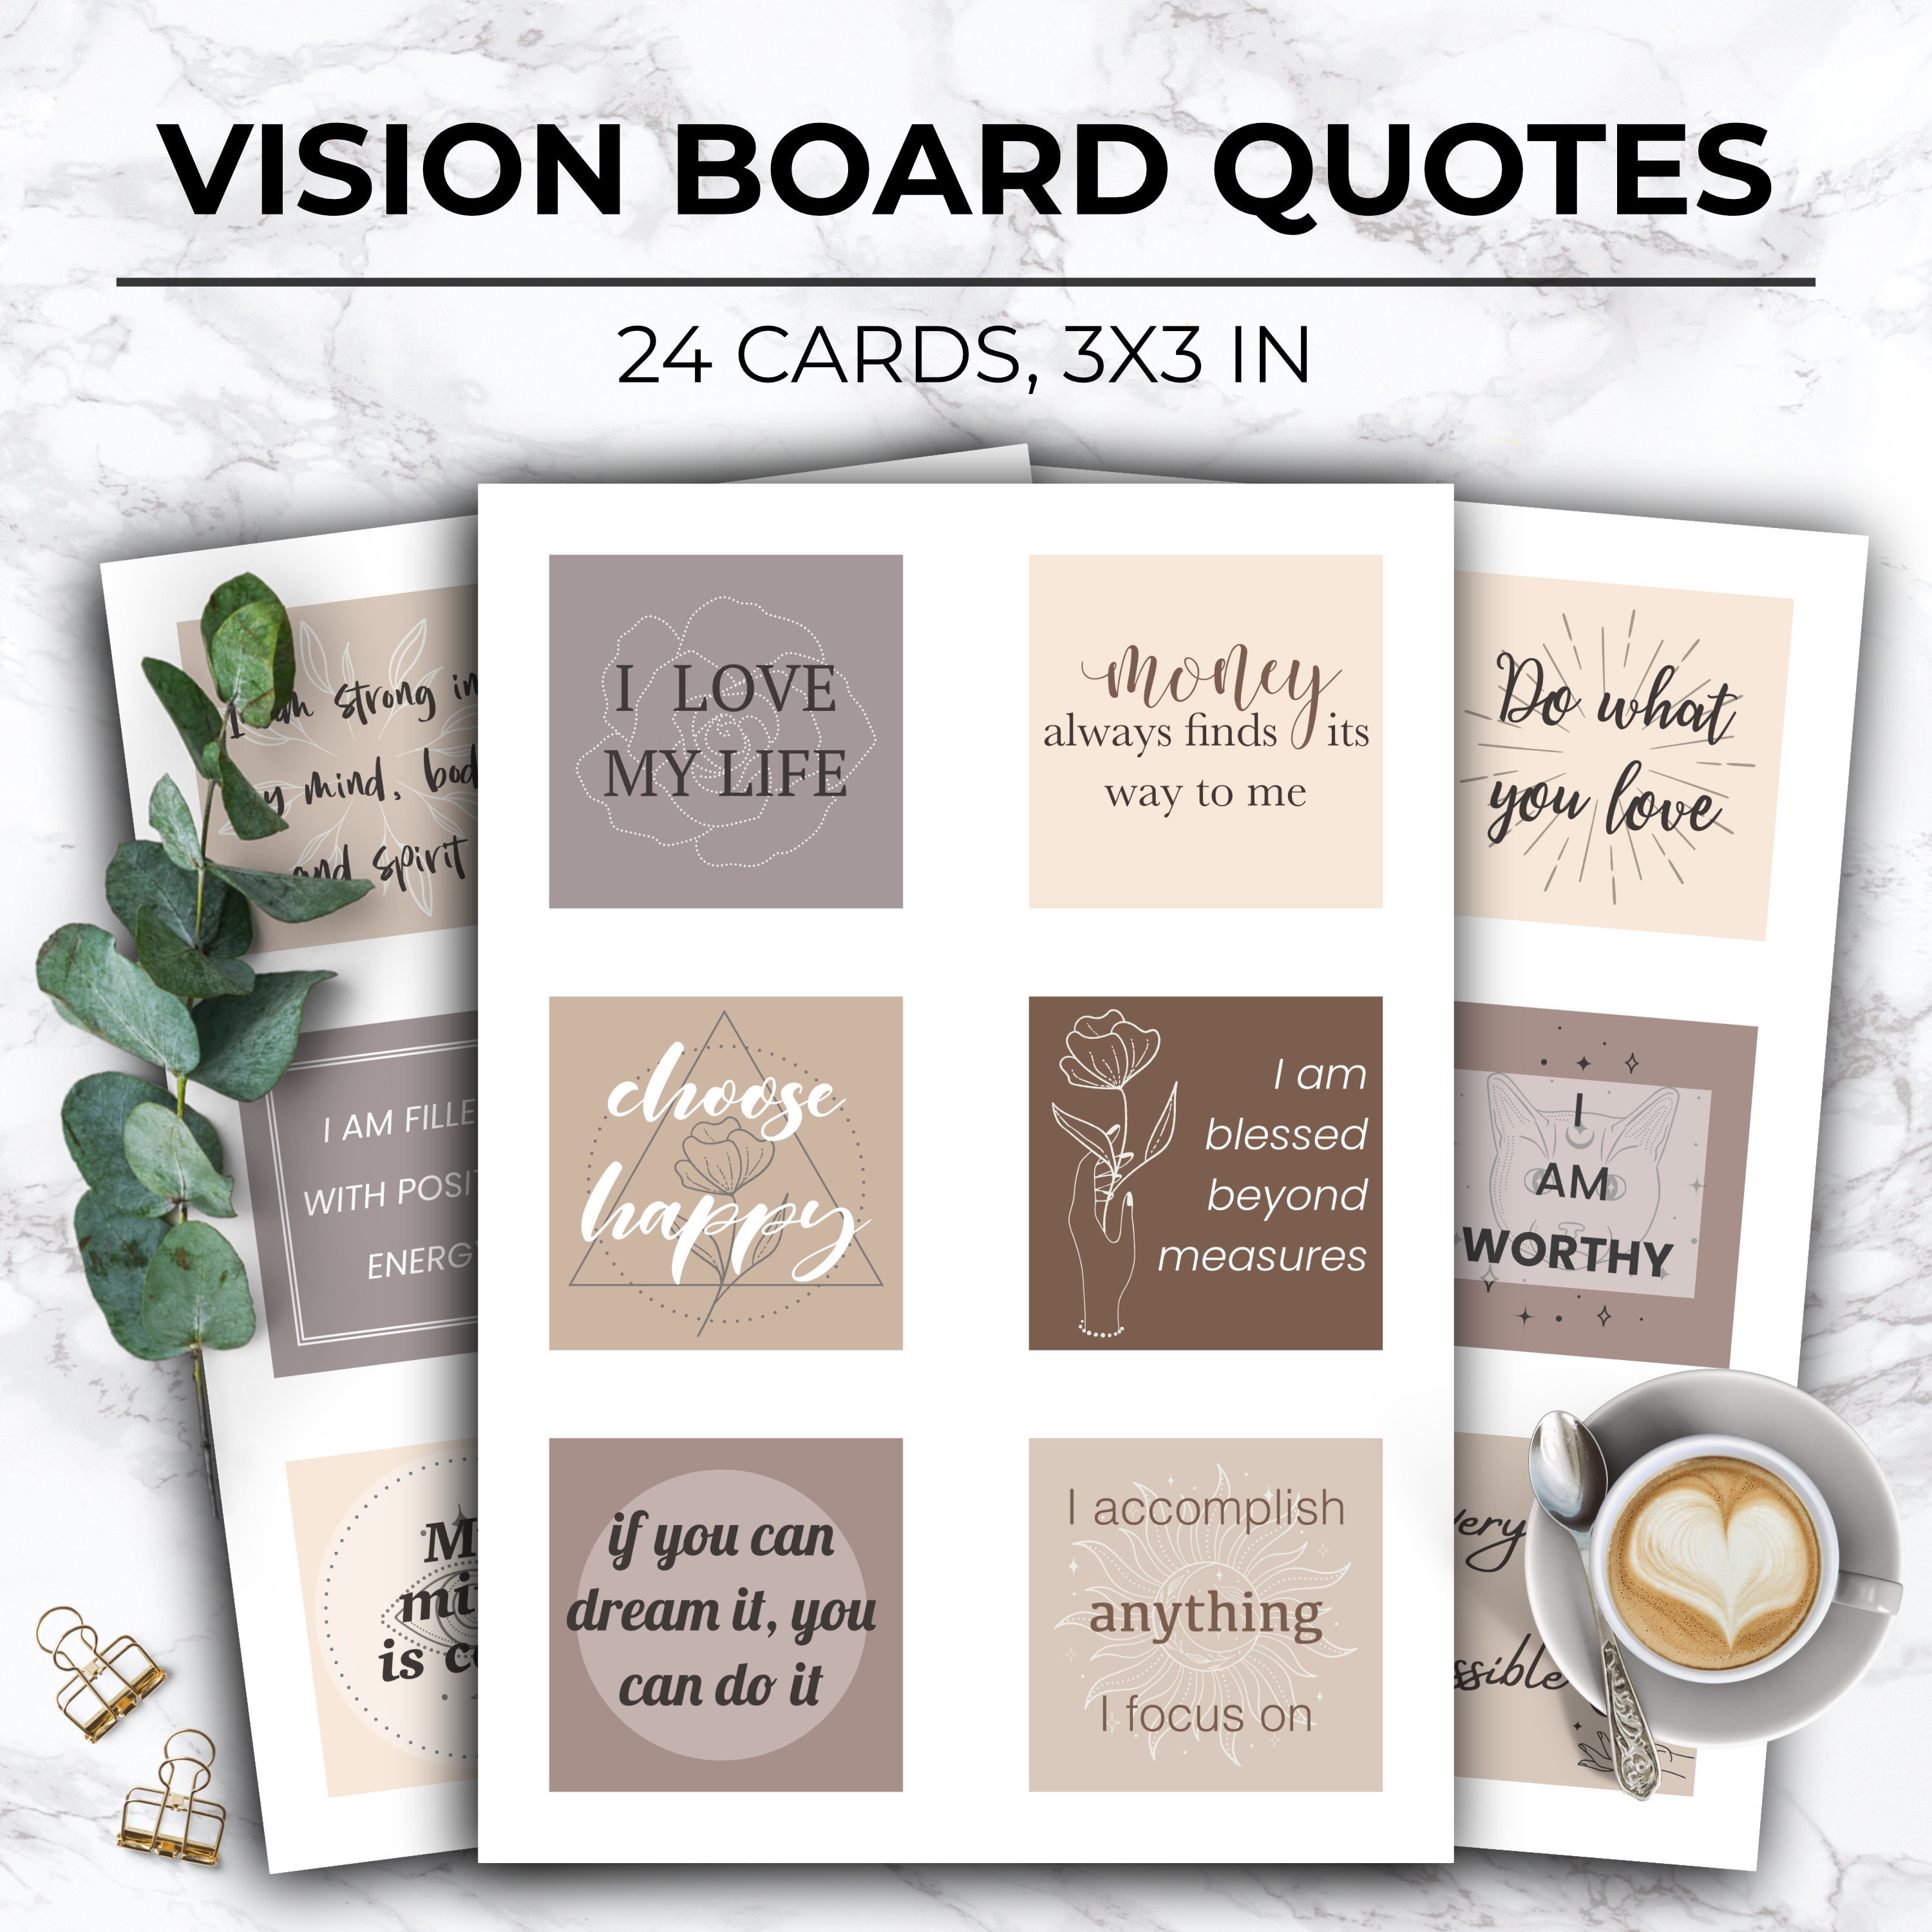 2023 Vision Board Clip Art Book for Black Men: 250+ Pictures Quotes Motivation | Manifesting & Affirmation Journal | Vision Board Supplies | Boar